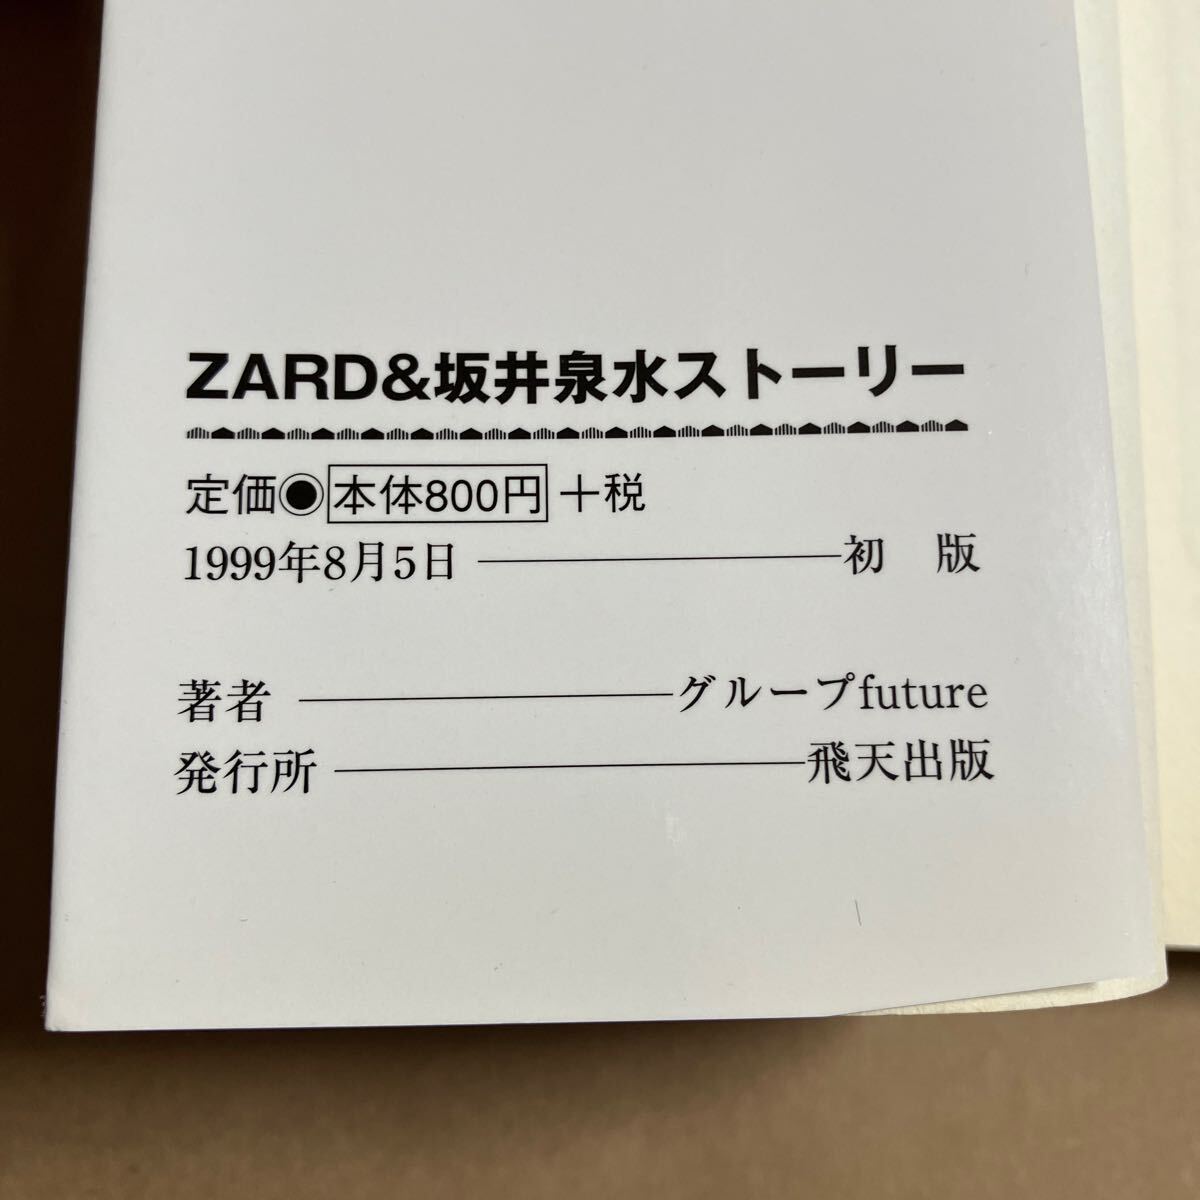 ZARD & 坂井泉水ストーリー 著:グループfuture 1999年8月5日 初版発行 表紙角に傷み 日焼けありの画像3